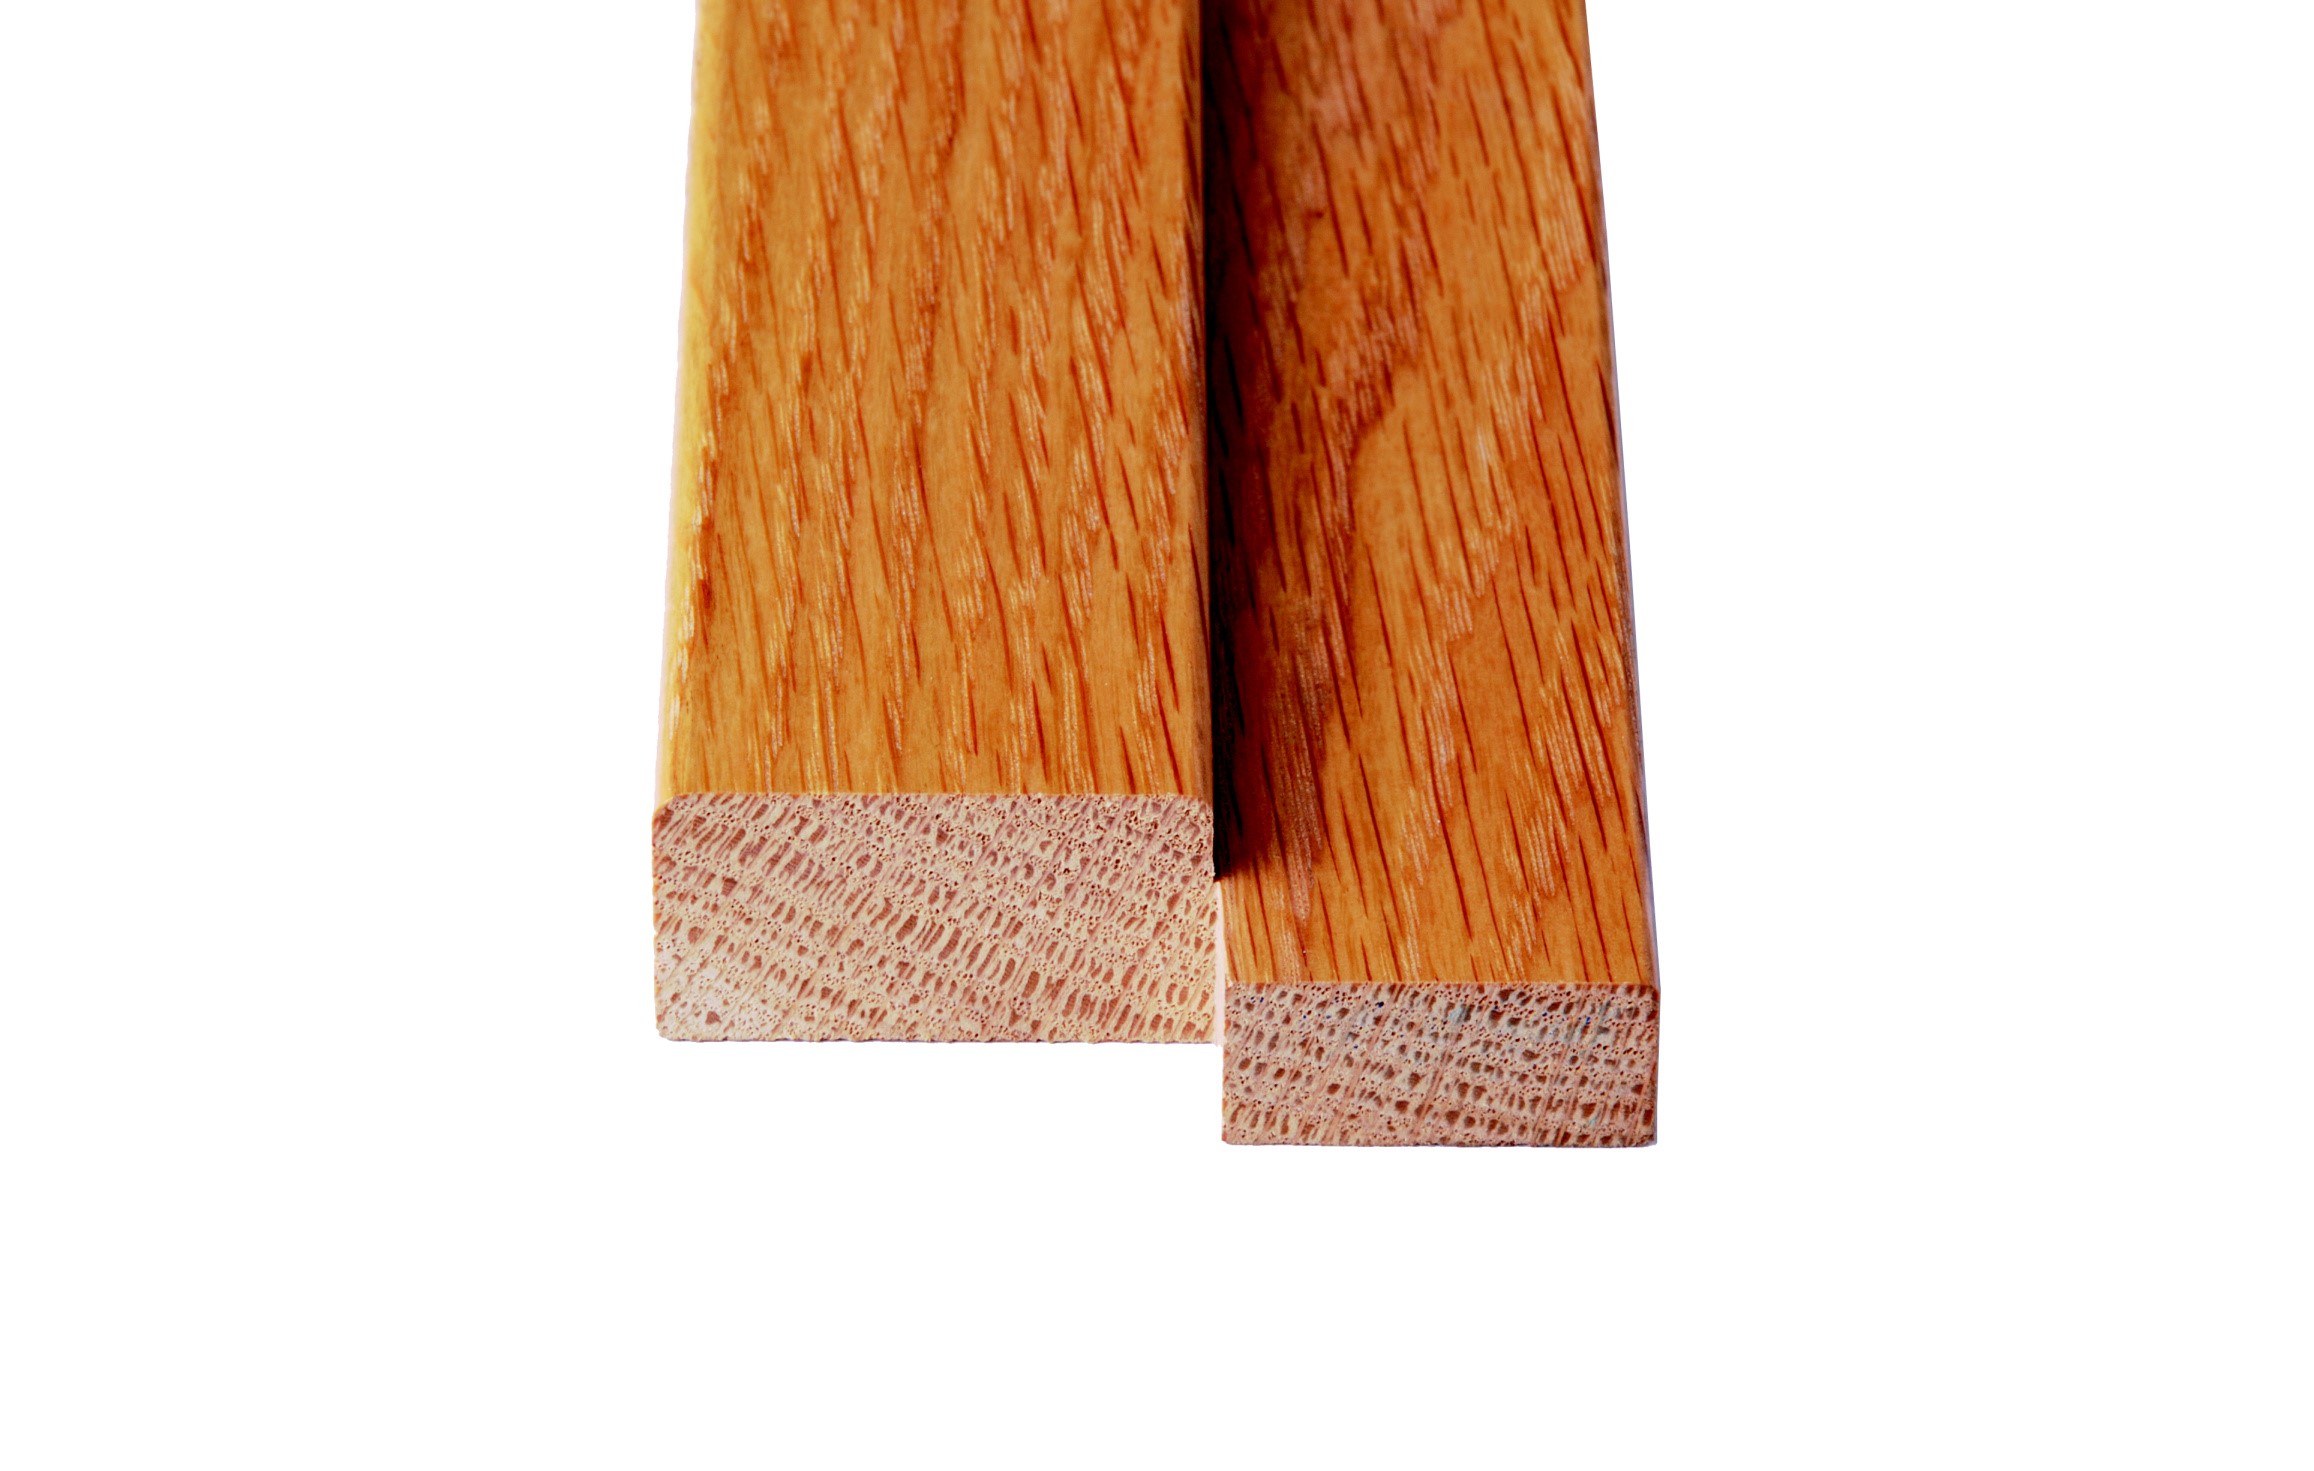 rebated-threshold-oak-68x22-29-m9-lacquered-maler